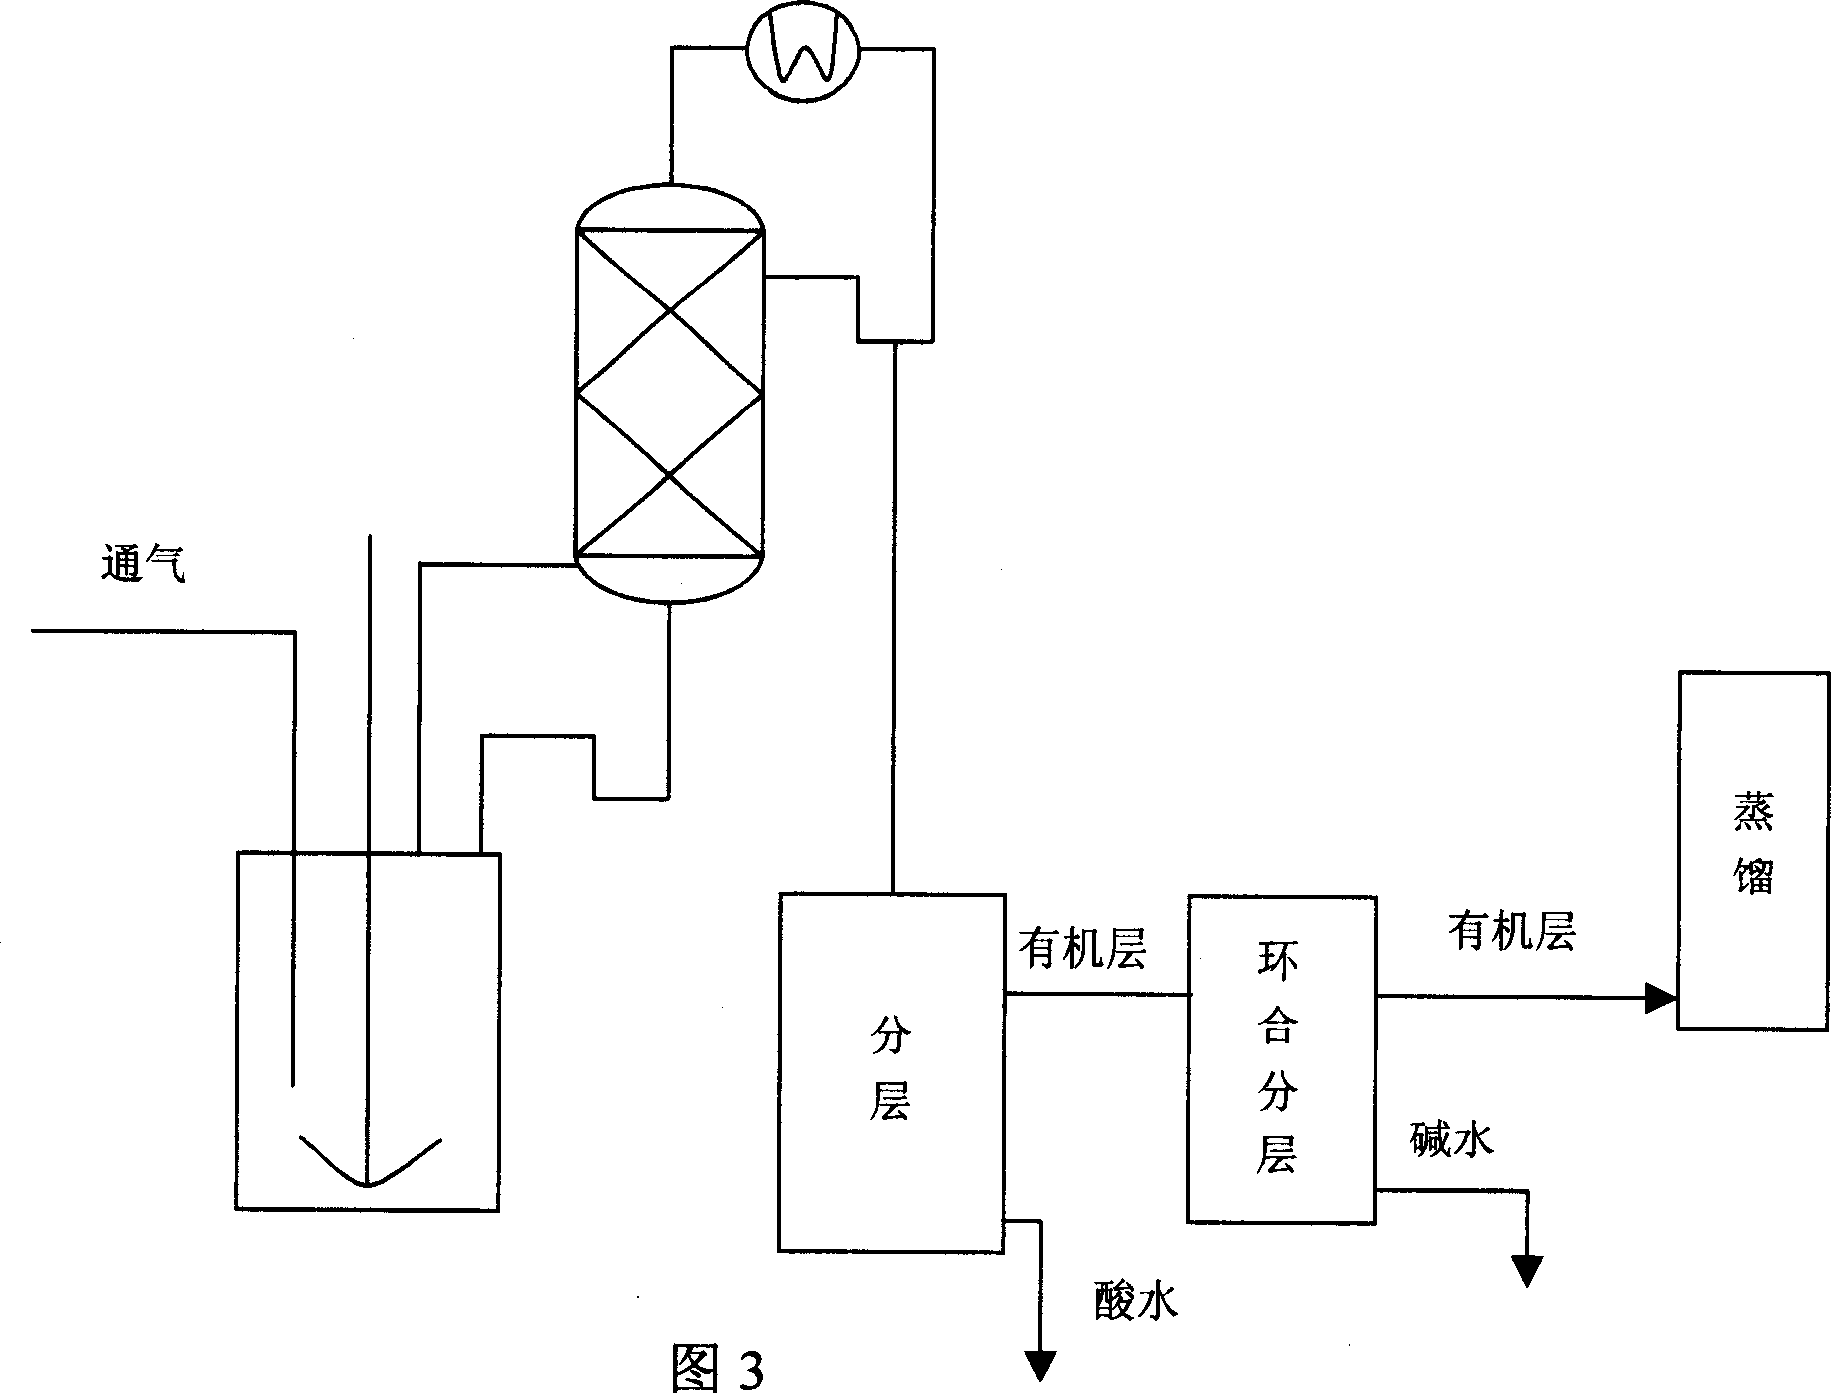 Process for preparing cyclopropyl methyl ketone